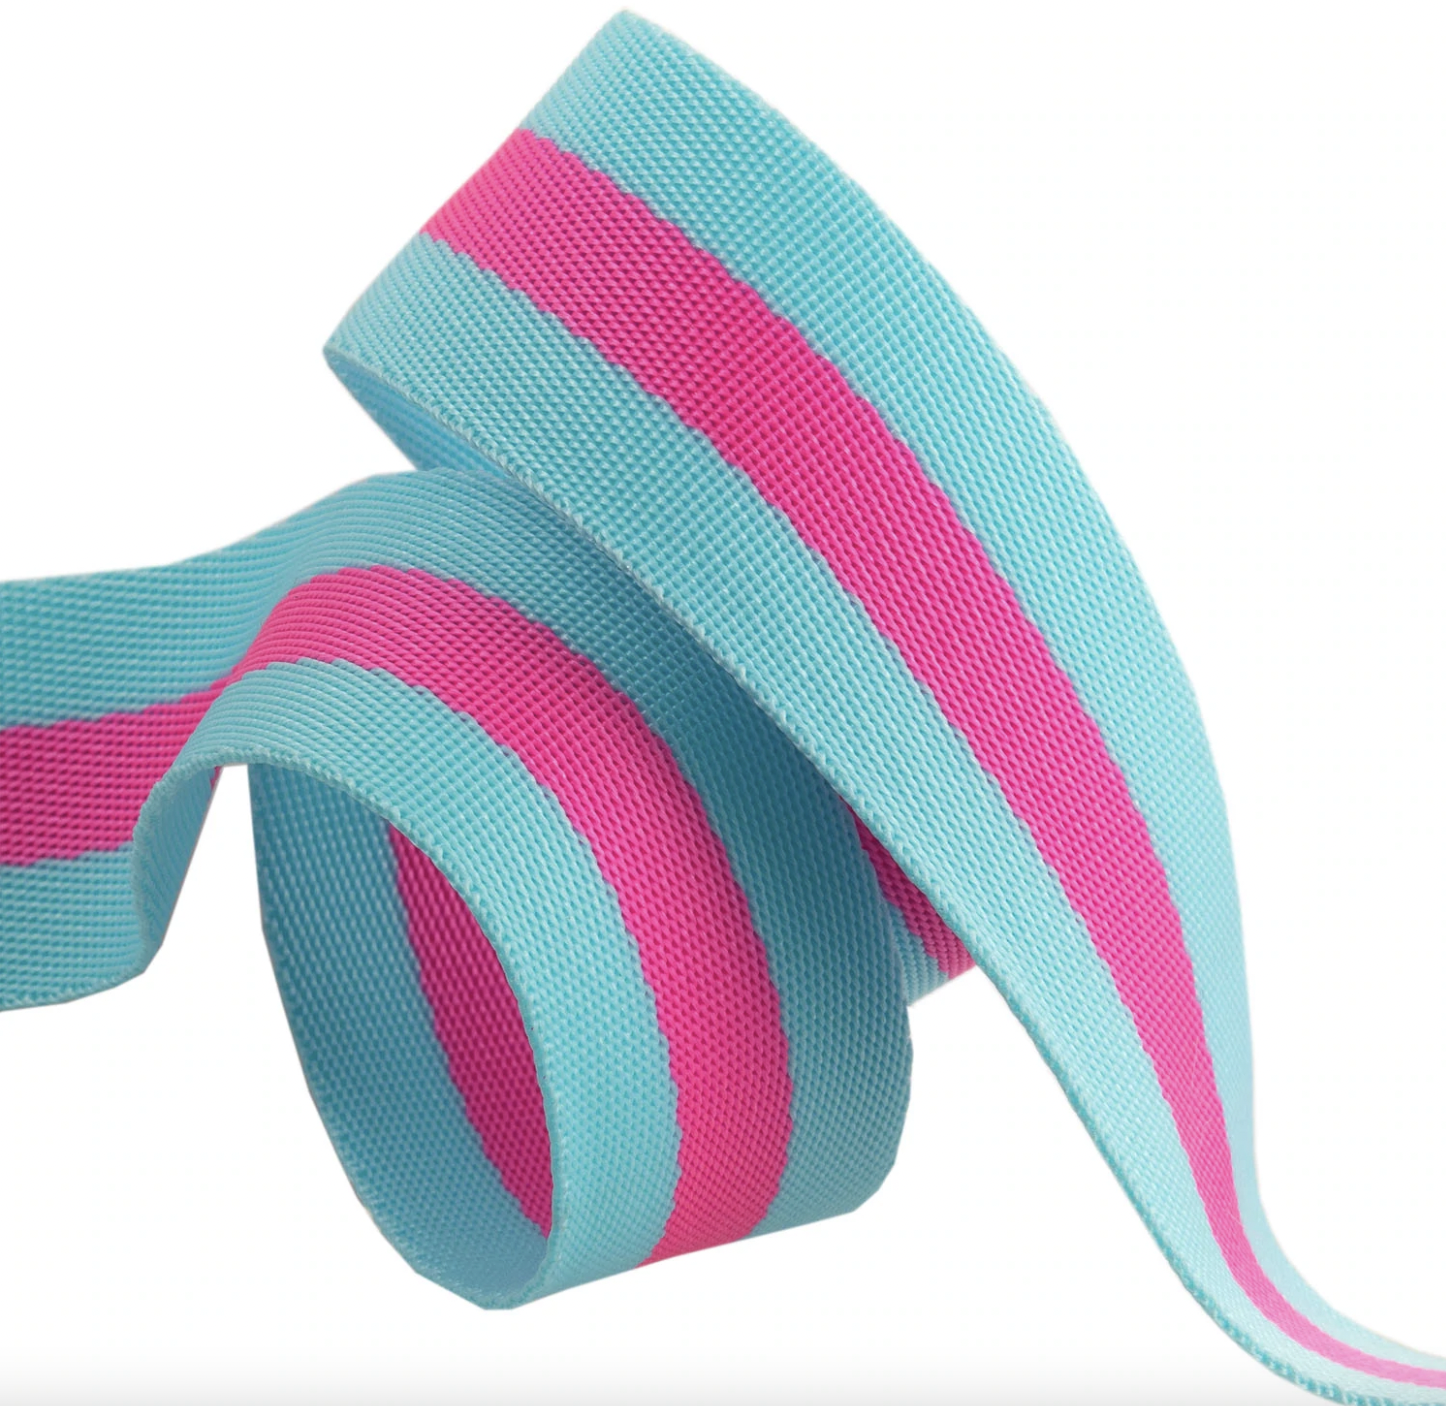 Tula Pink HomeMade Noon Designer Ribbon Pack DP-90TPNN pack of 5 woven jacquard ribbons